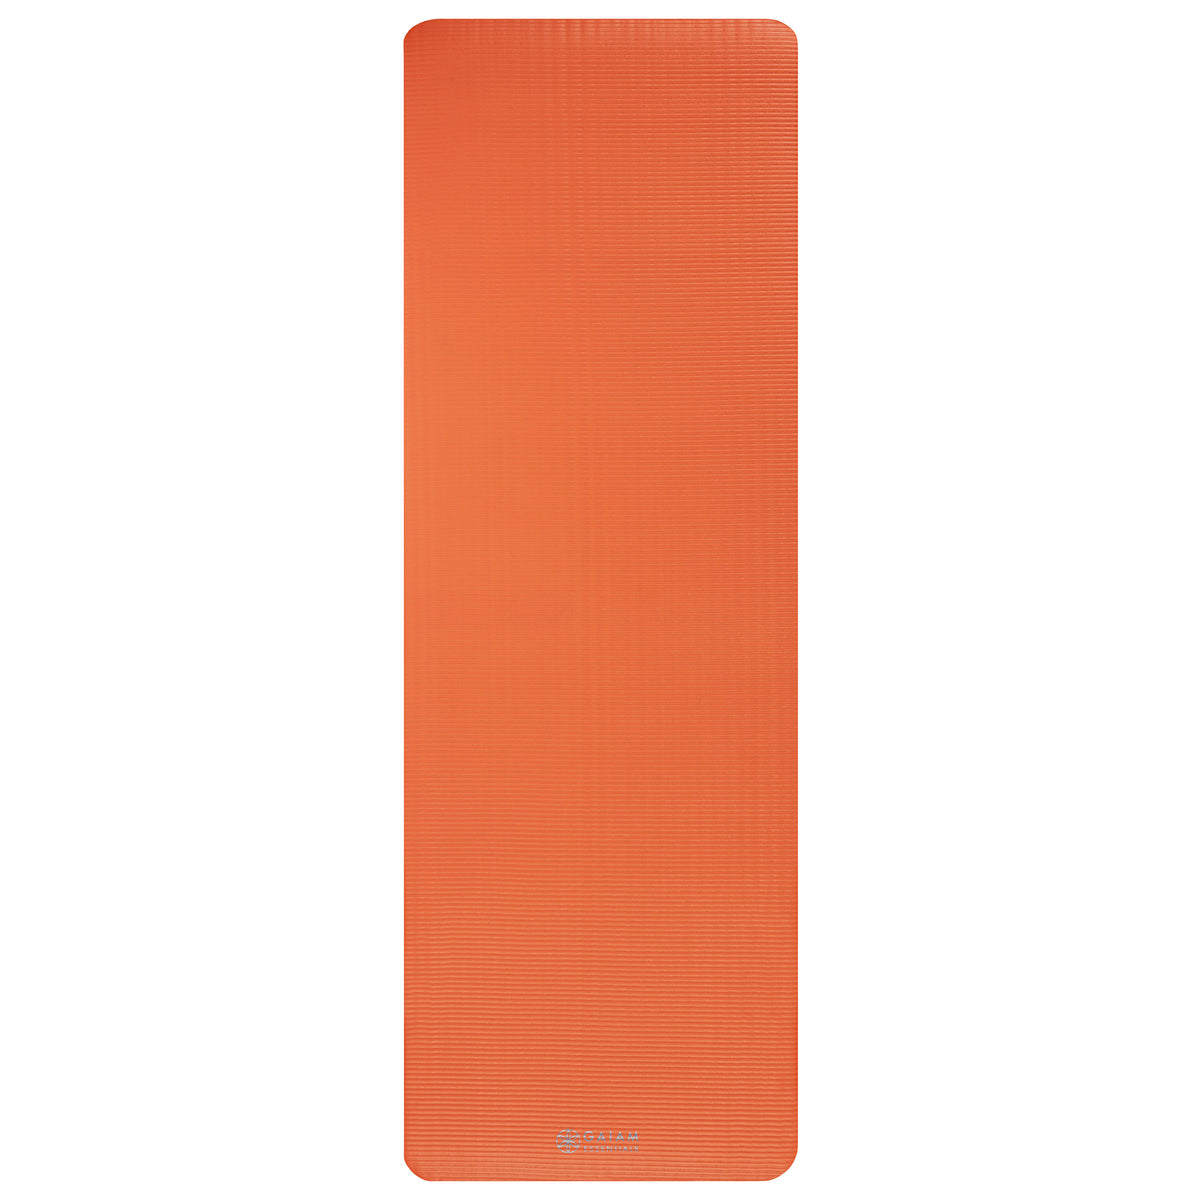 Gaiam Essentials Fitness Mat & Sling (10mm) orange flat